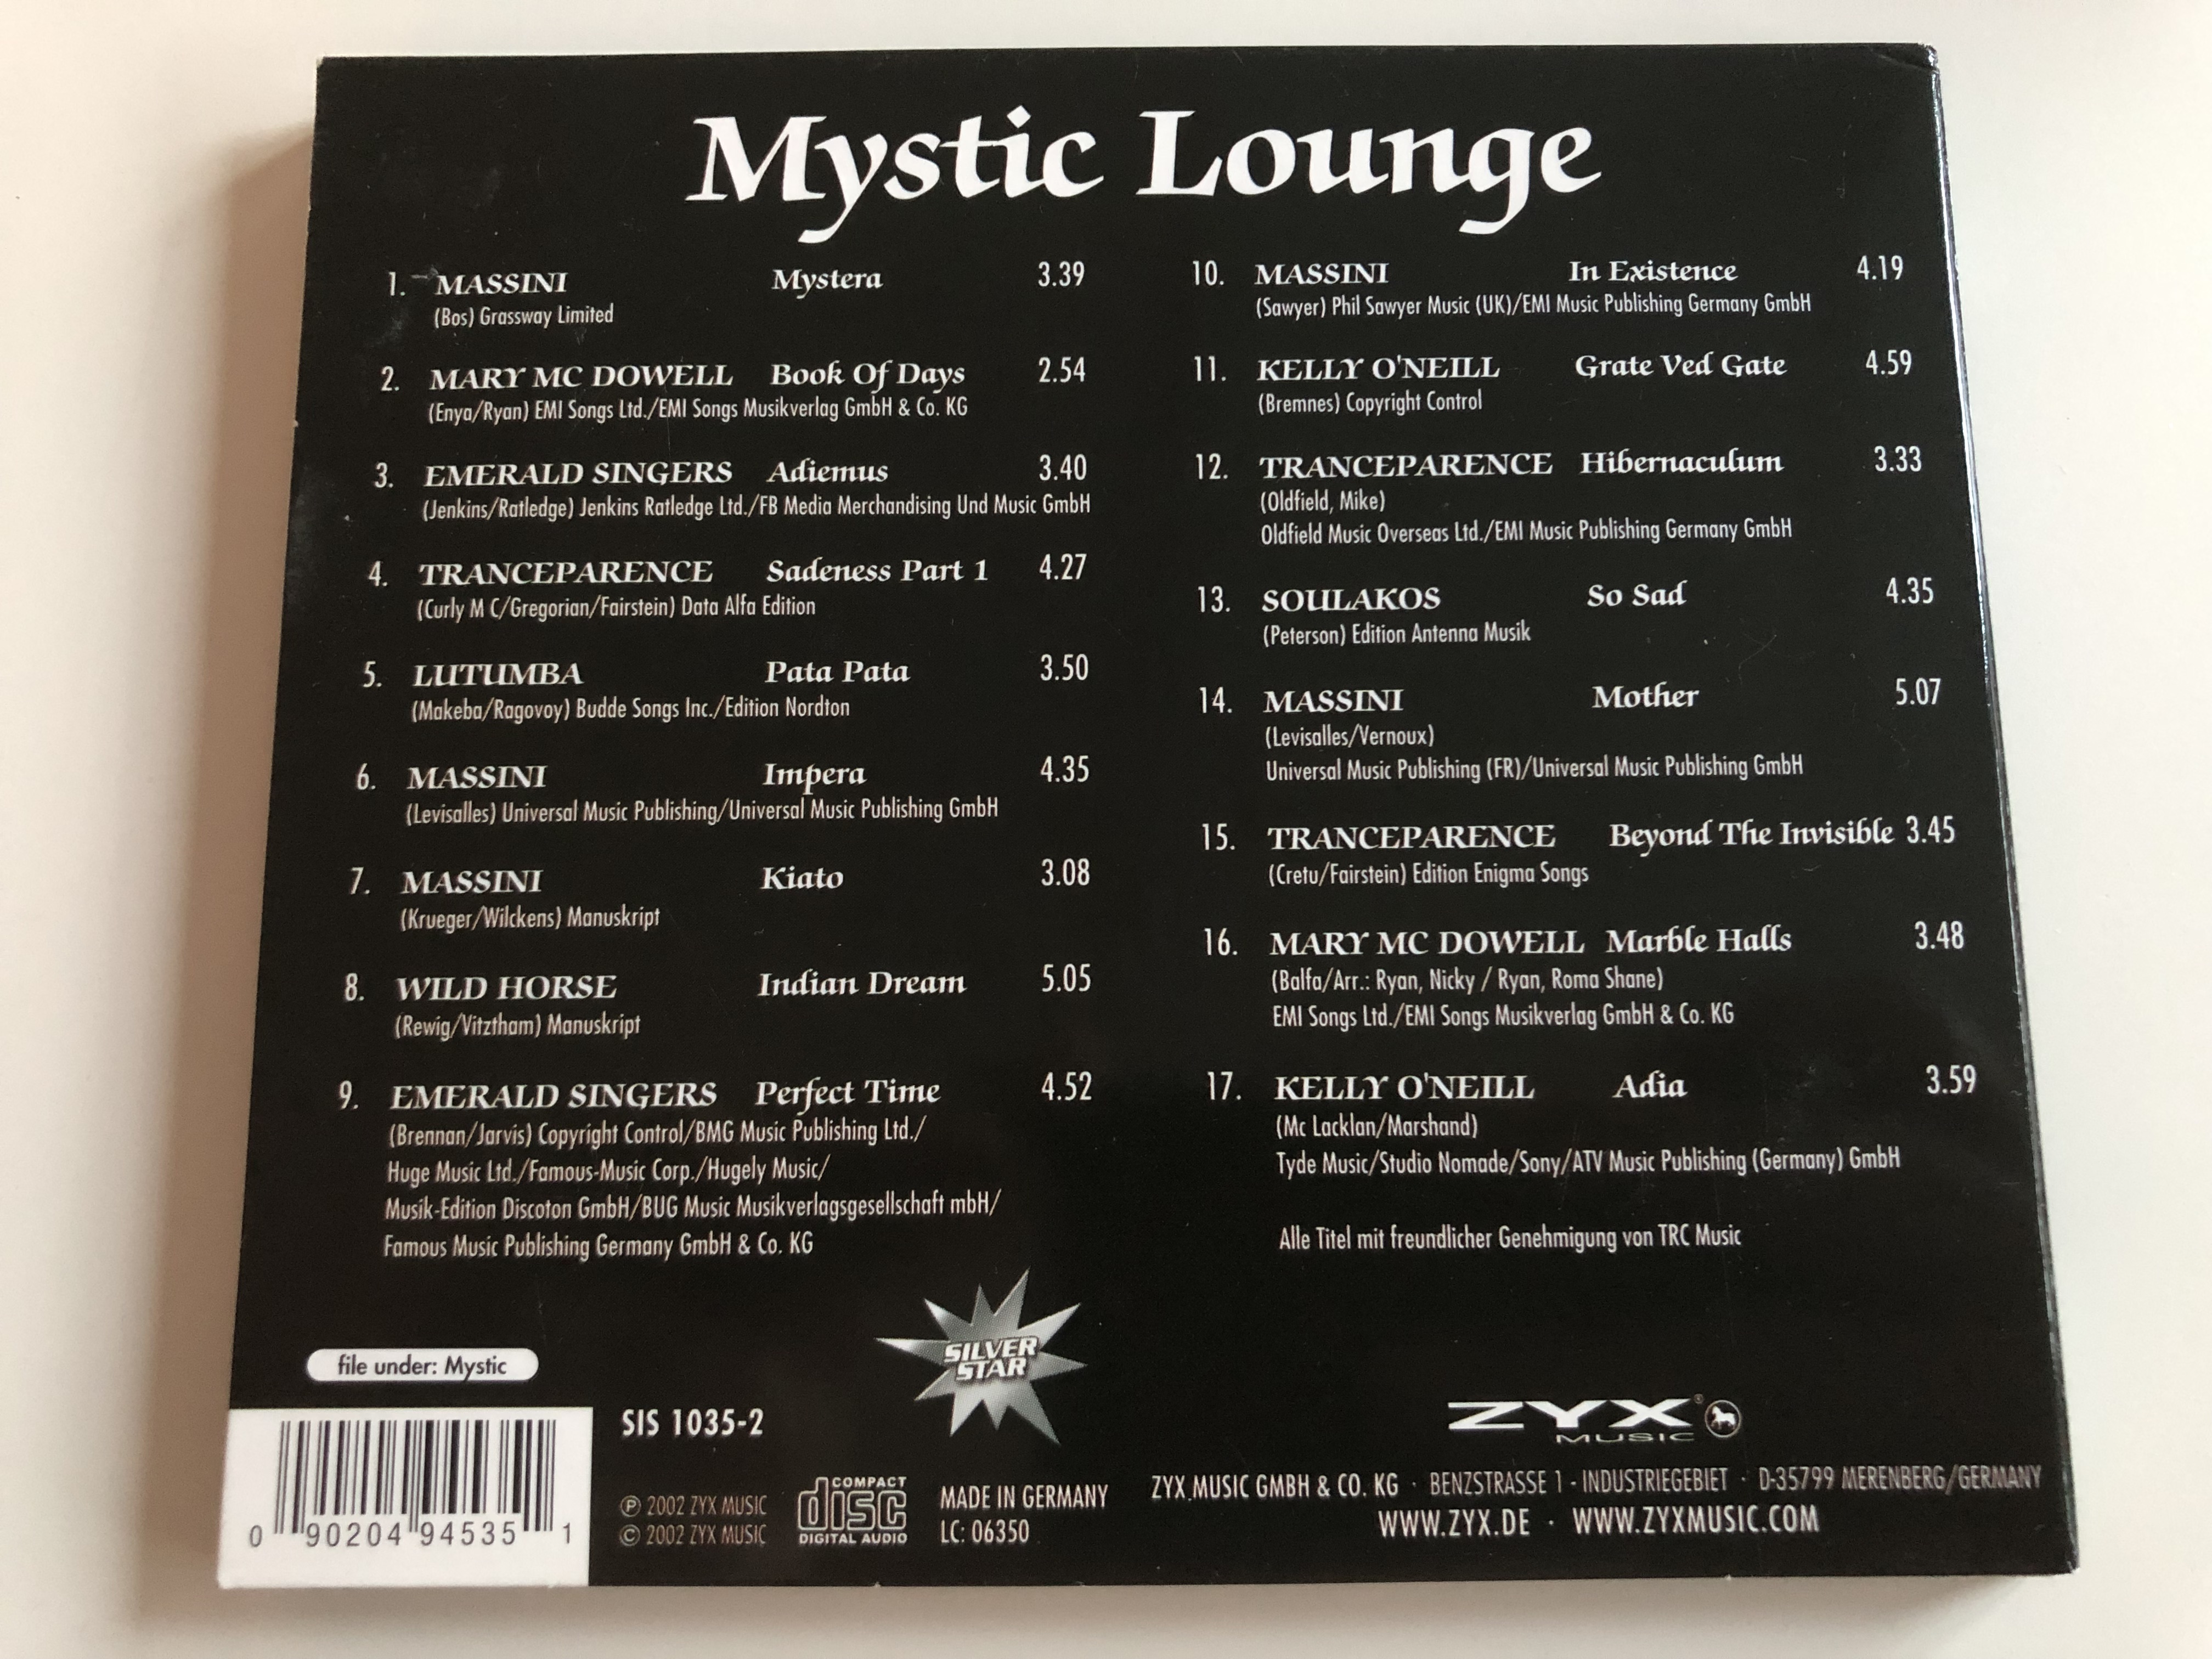 mystic-lounge-incl.-mystera-adiemus-sadeness-part-1-kiato-indian-dream-hibernaculum-...-and-more-audio-cd-2002-zyx-music-sis-1035-2-3-.jpg